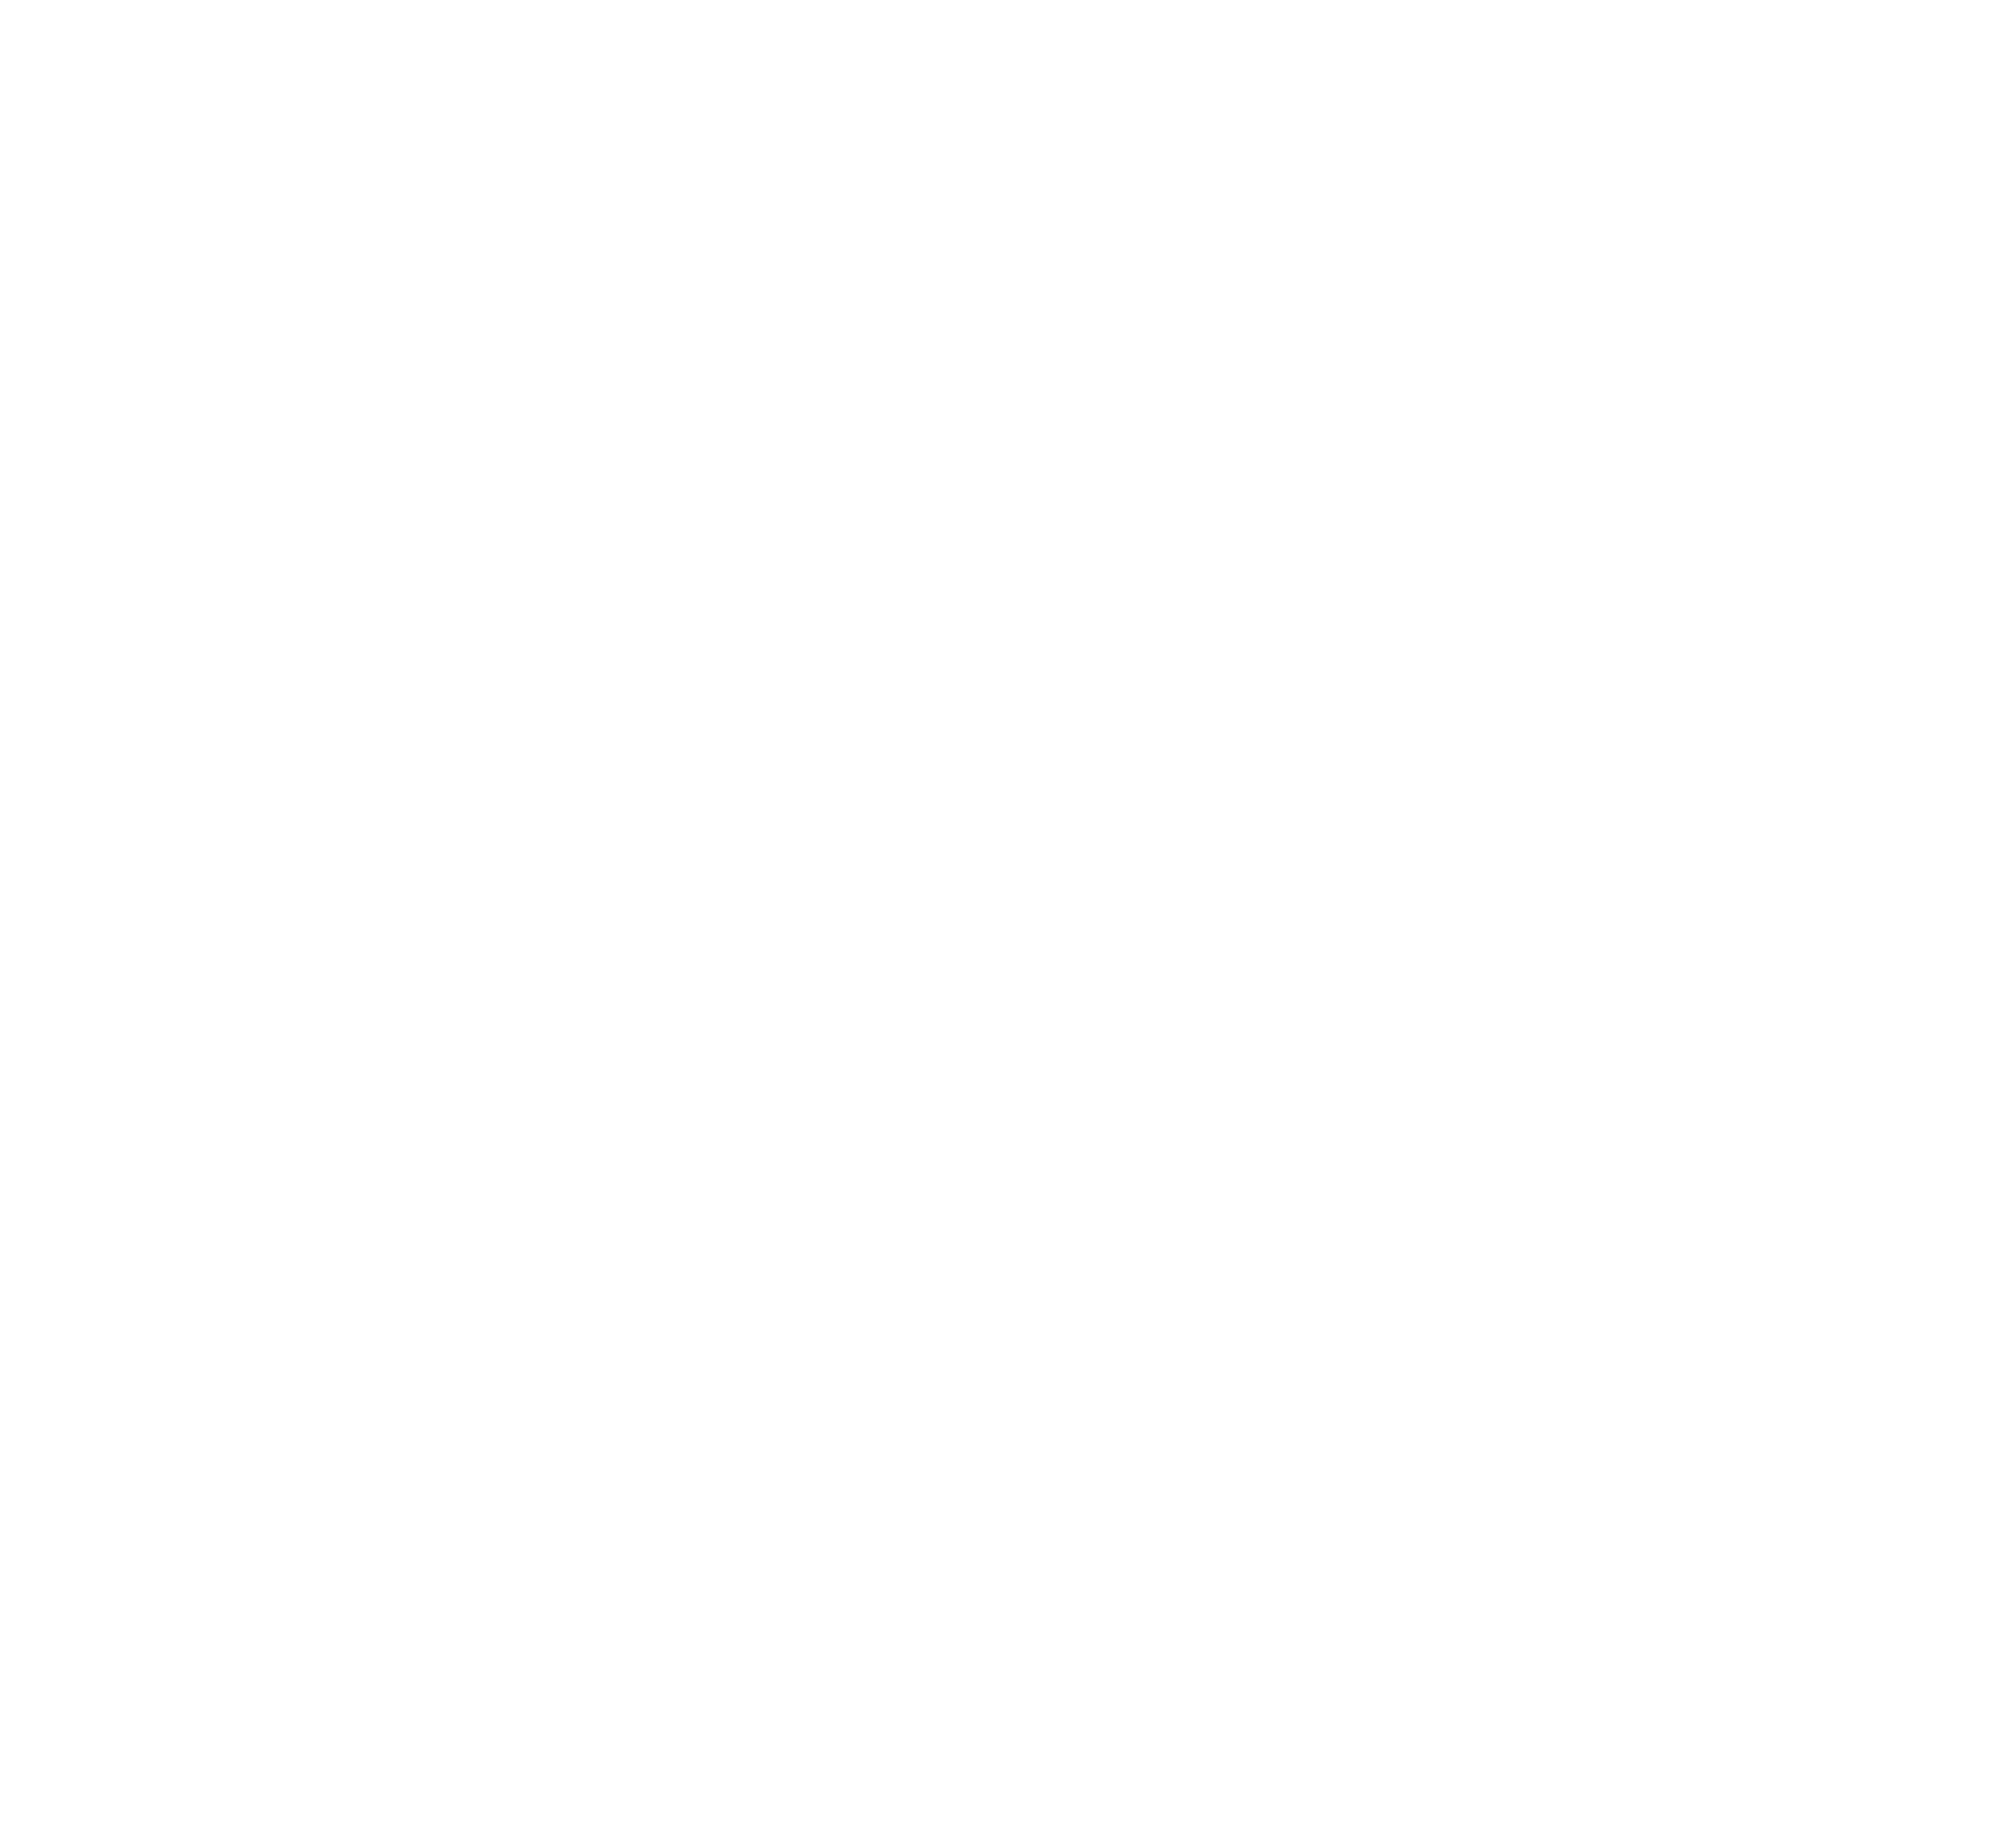 12eleven_logo_white